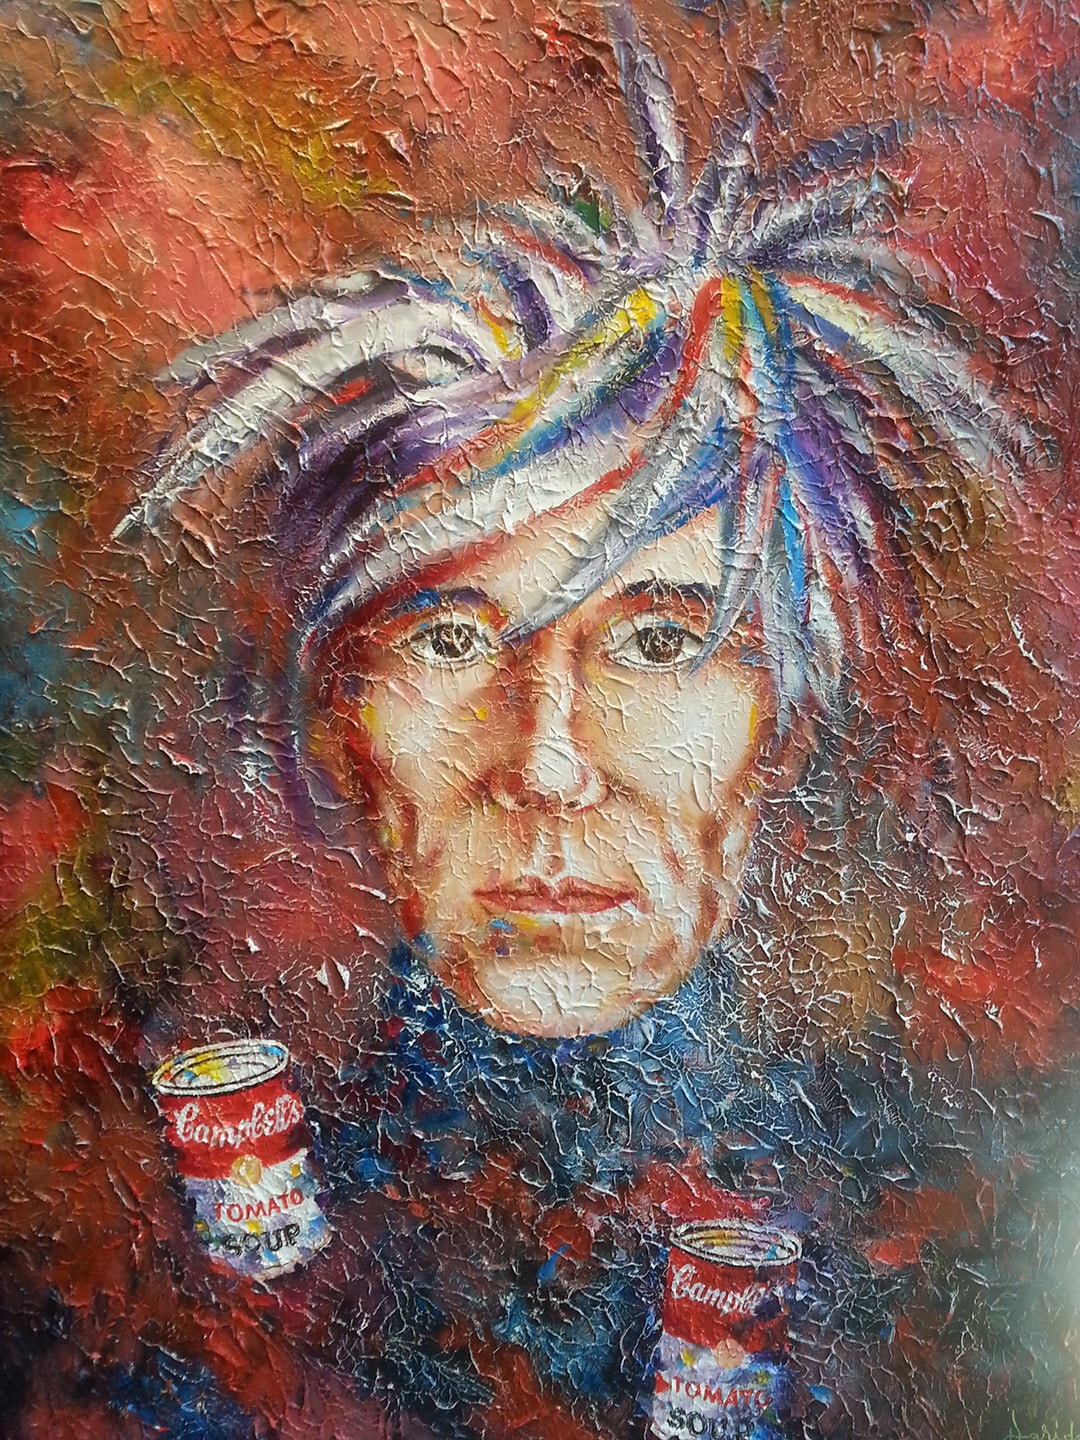 "Andy Warhol" Oil on Canvas, 40x30in by Alexandru Darida